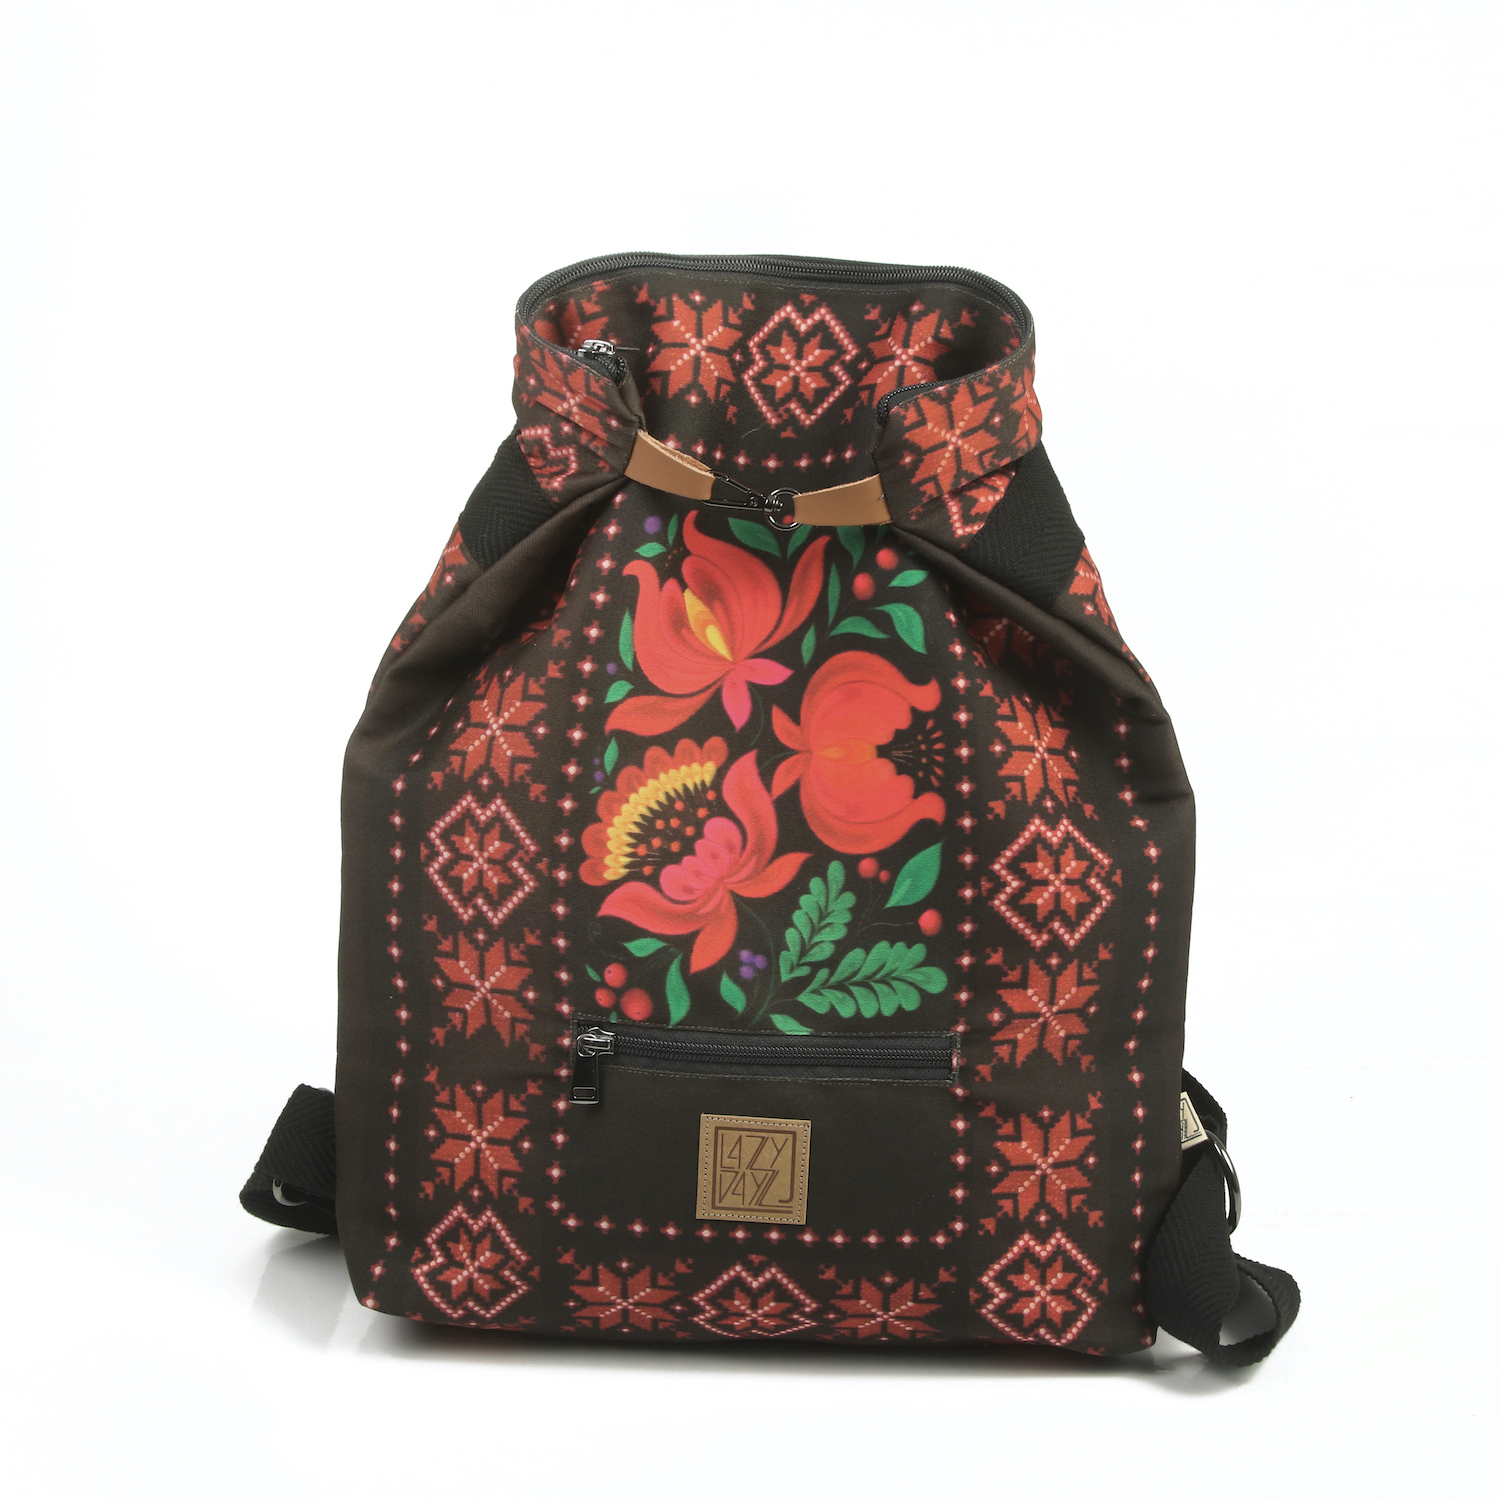 LazyDayz Designs Backpack γυναικείος σάκος πλάτης χειροποίητος bb0507d